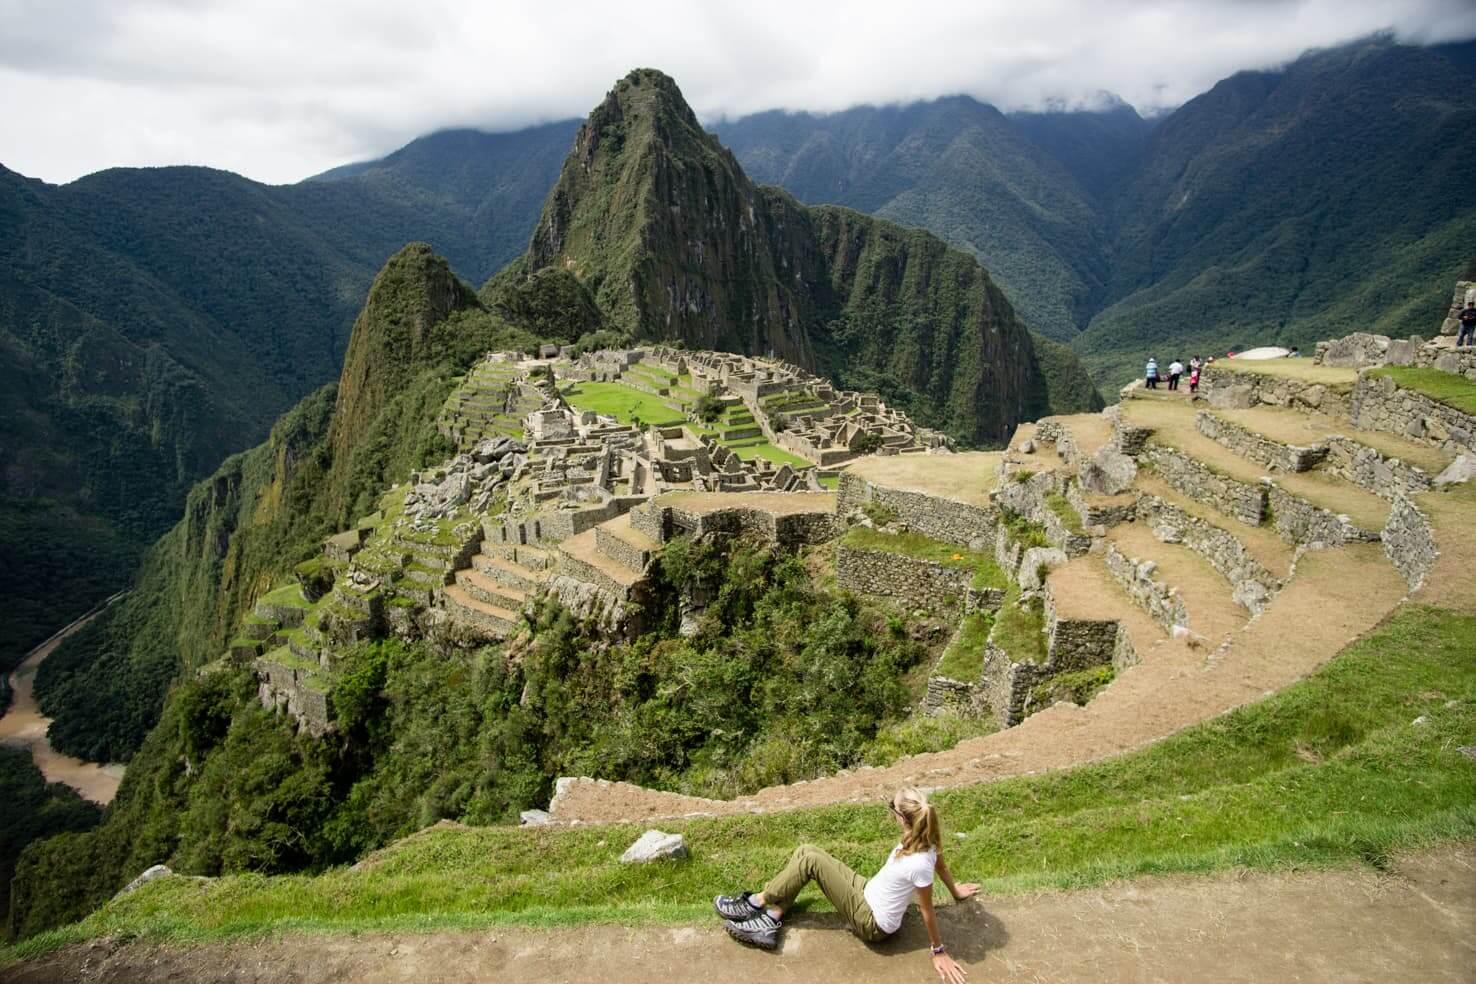 Salkantay trek to Machu Picchu, Peru